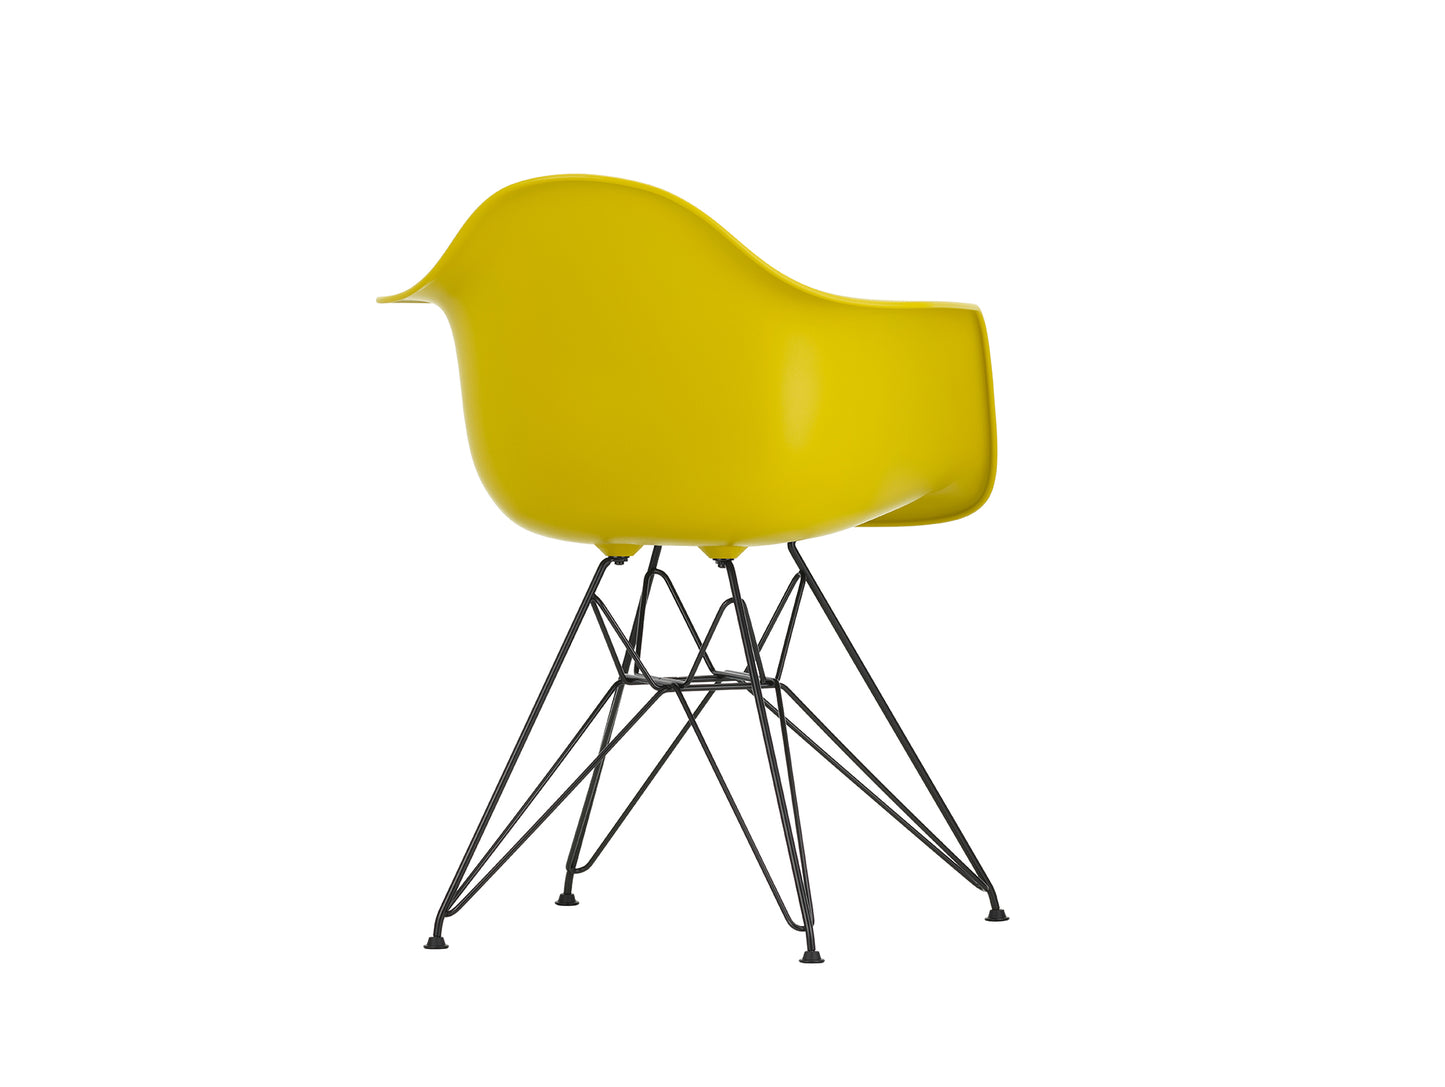 Eames DAR Plastic Armchair RE by Vitra - 34 Mustard Shell / Basic Dark Base